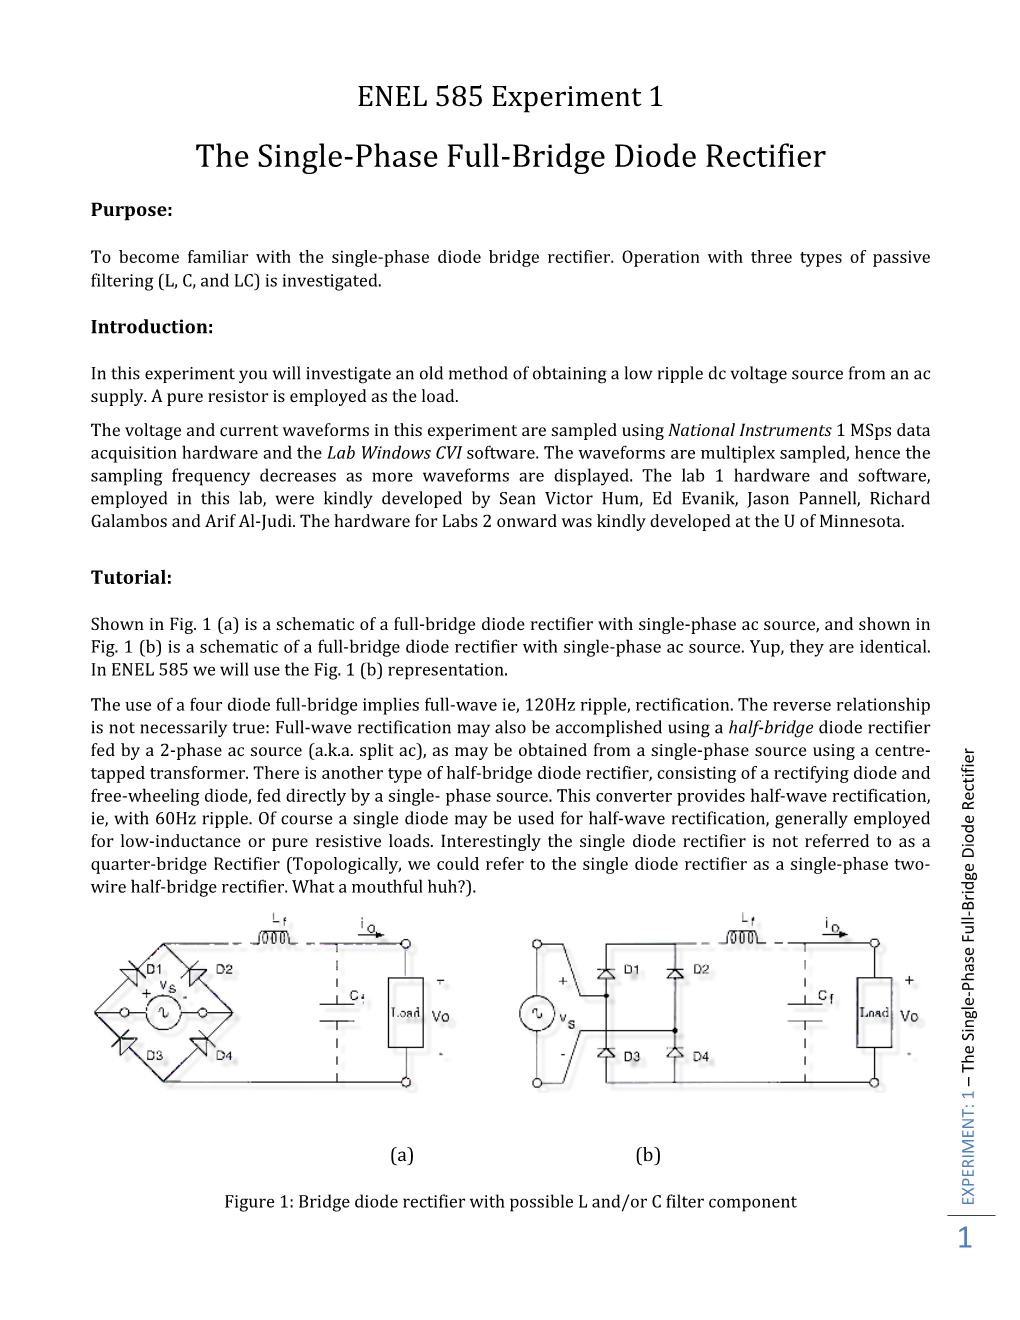 1 the Single-Phase Full-Bridge Diode Rectifier